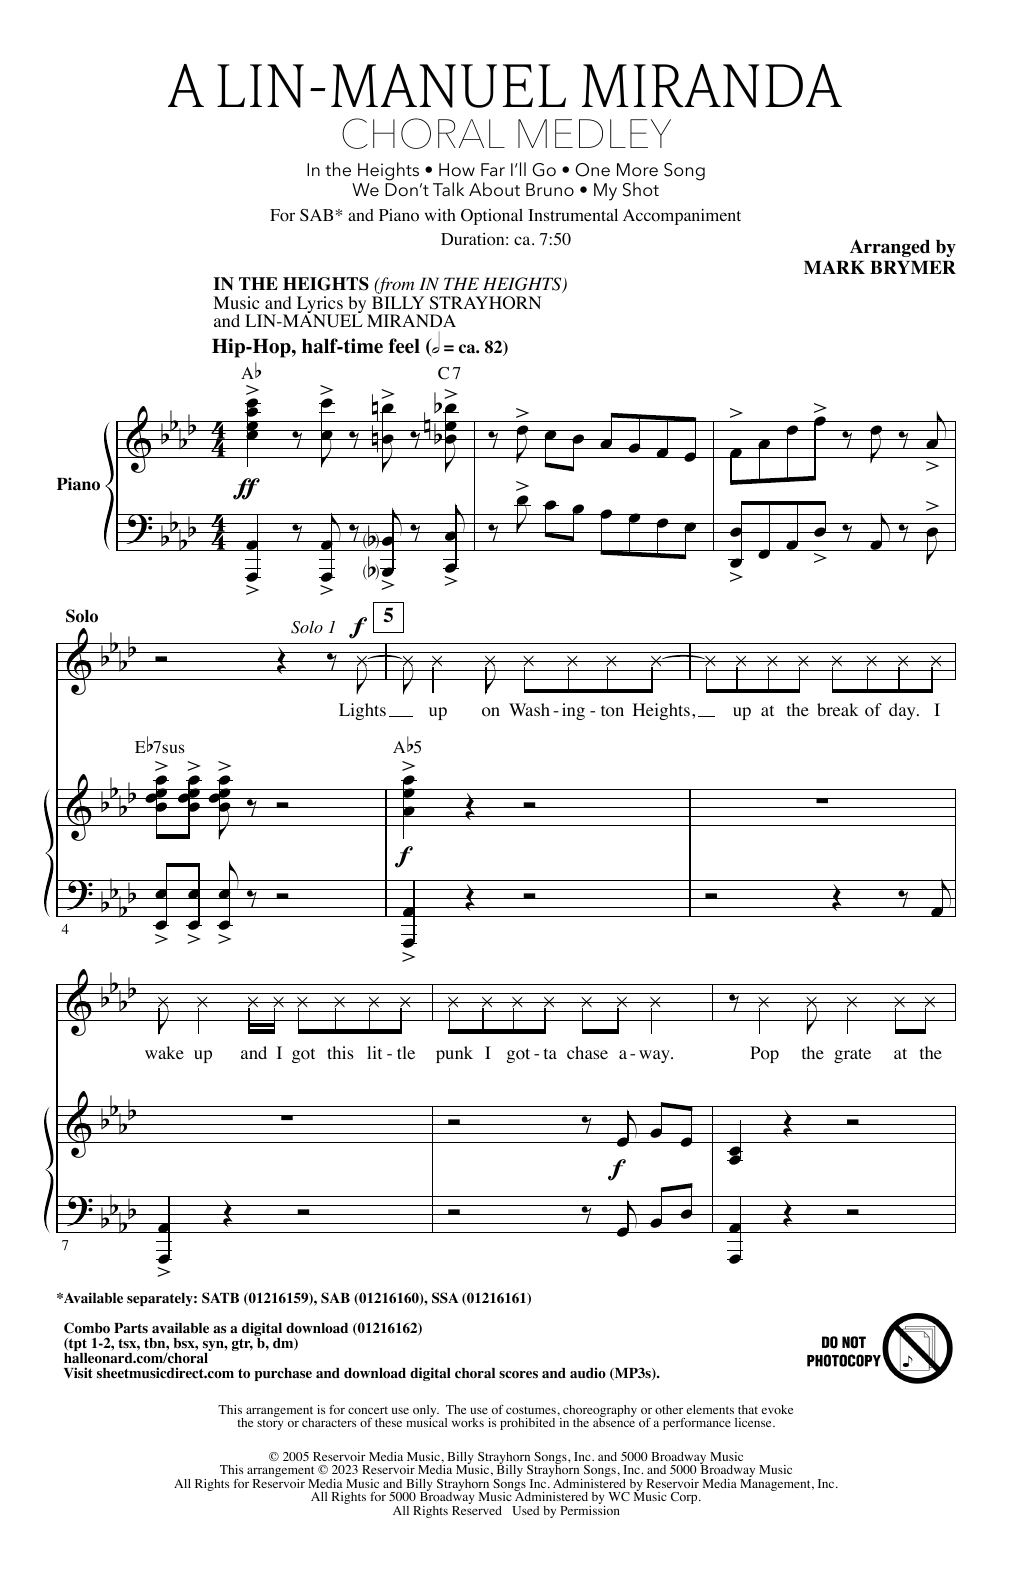 Download Lin-Manuel Miranda A Lin-Manuel Miranda Choral Medley (arr. Mark Brymer) Sheet Music and learn how to play SAB Choir PDF digital score in minutes